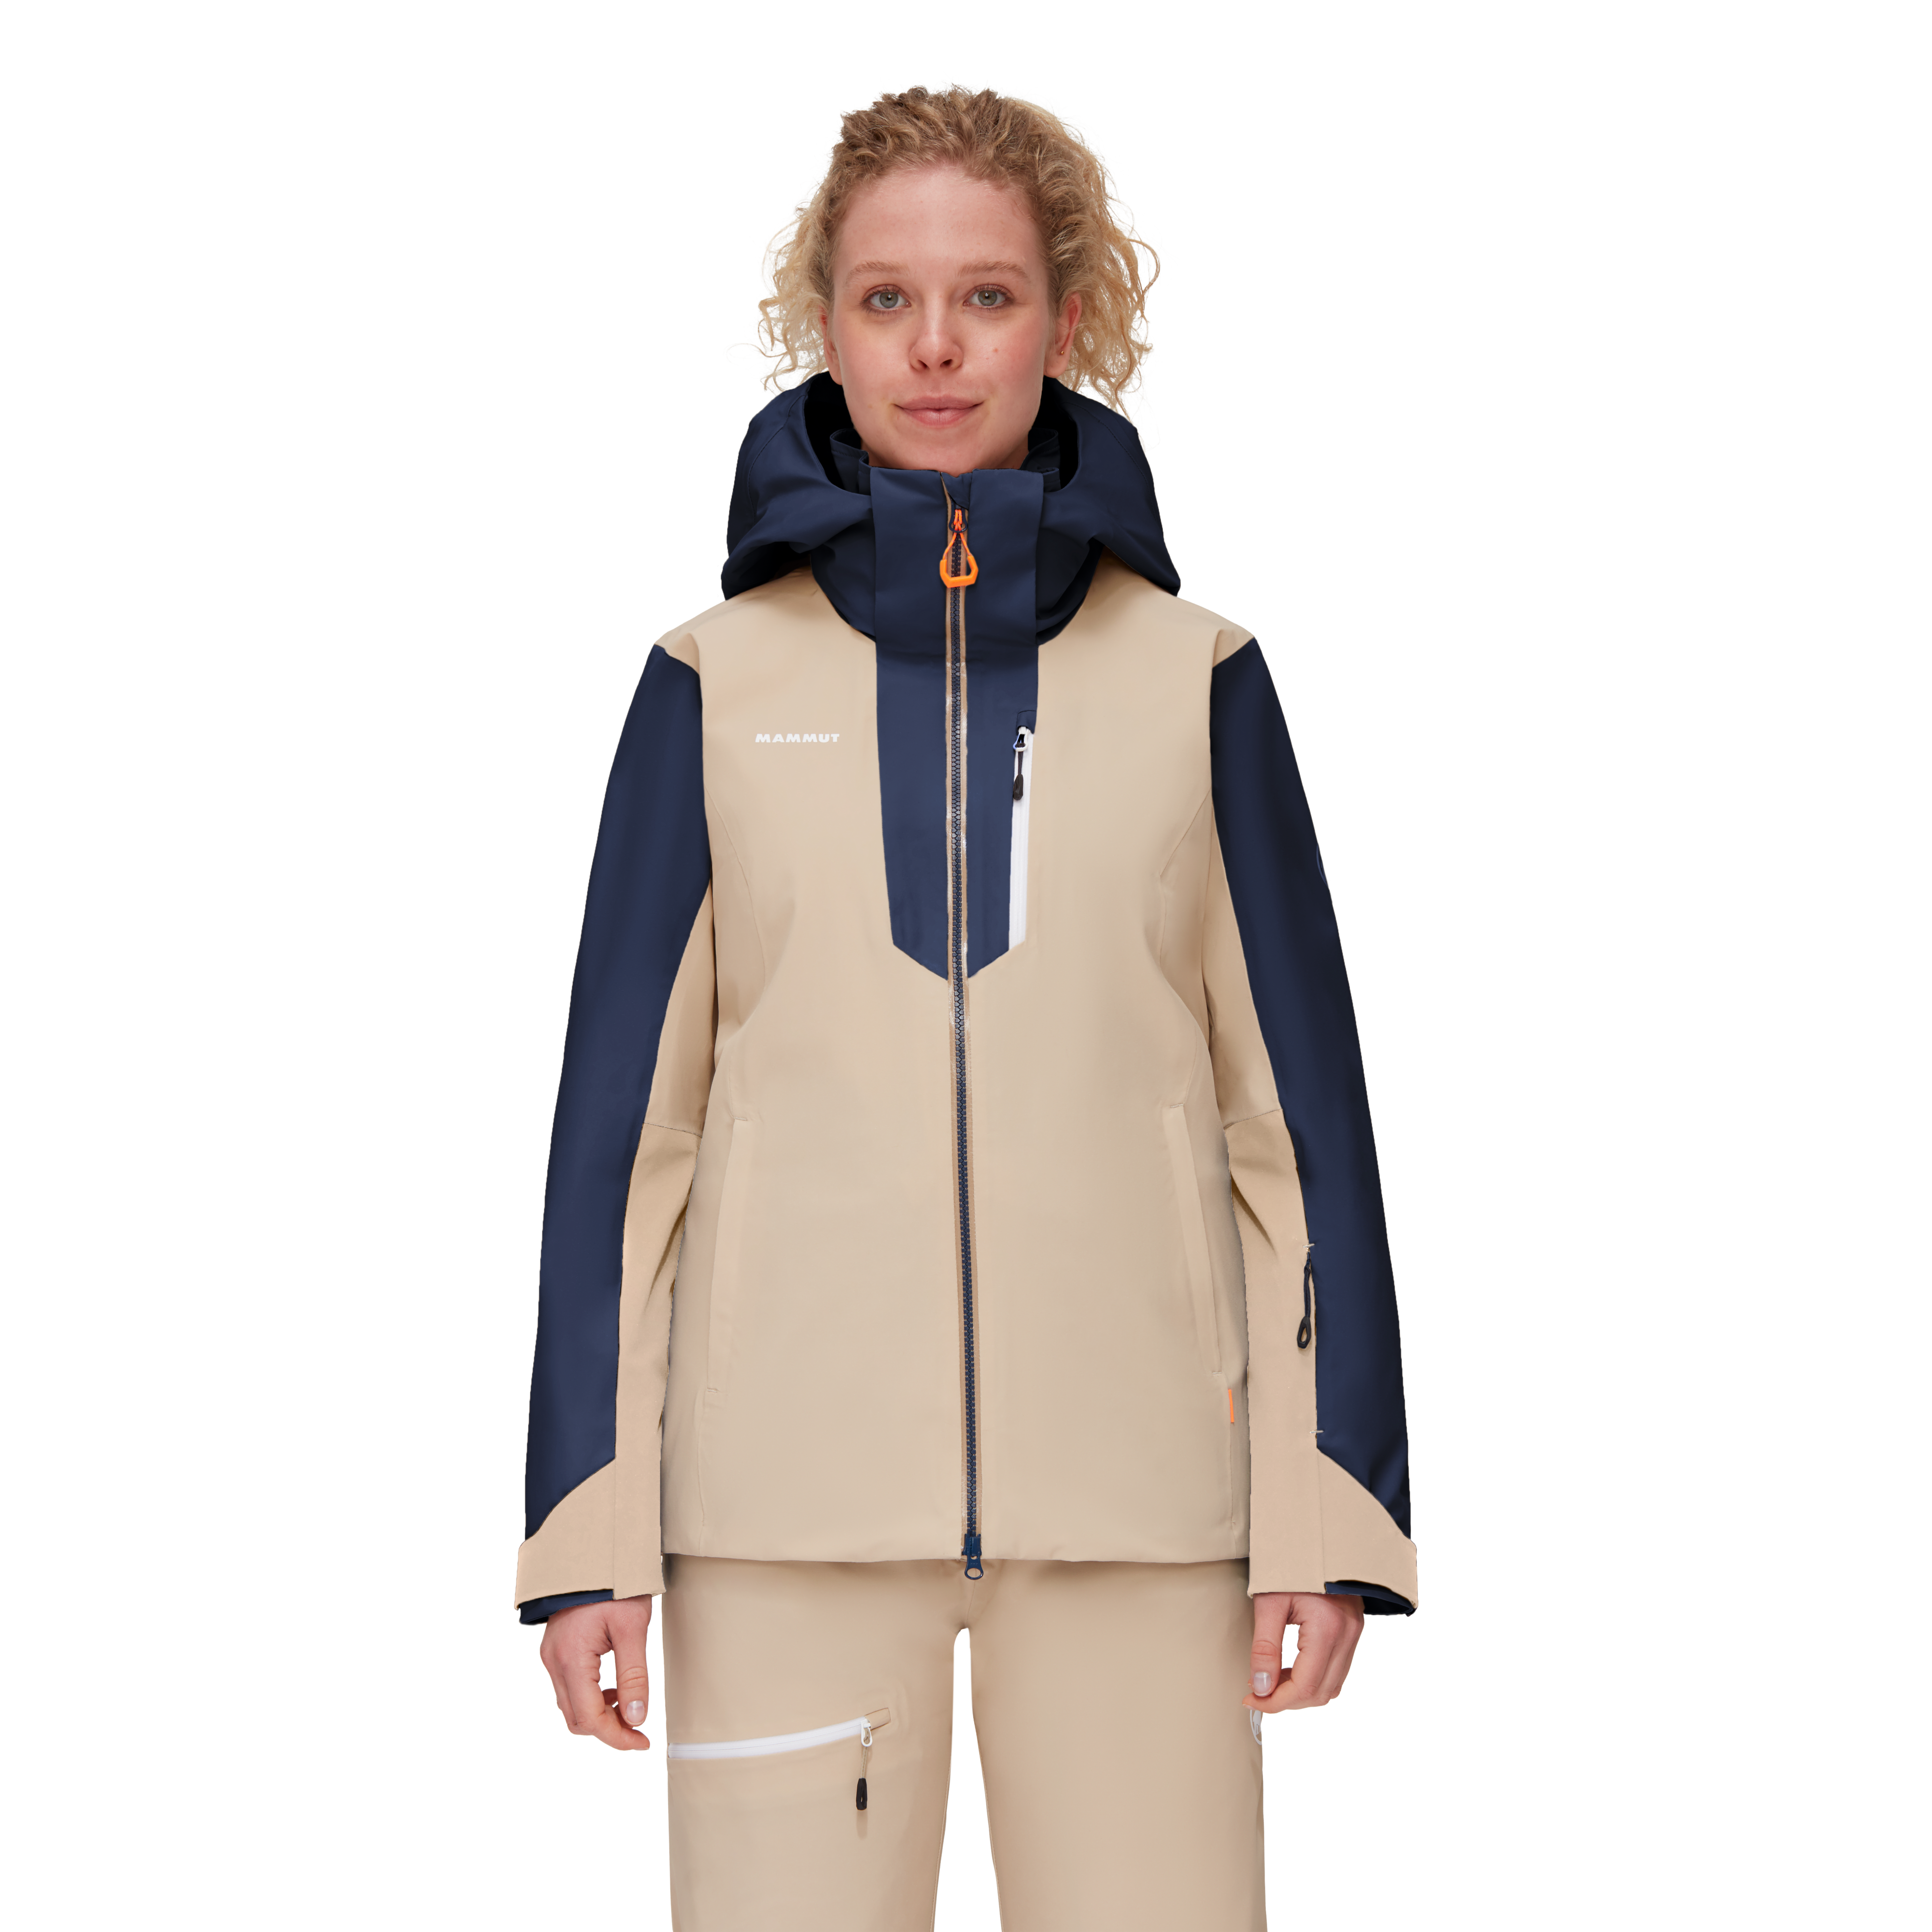 Mammut Womens Ski Jacket Size L Belted insulated Dry tech